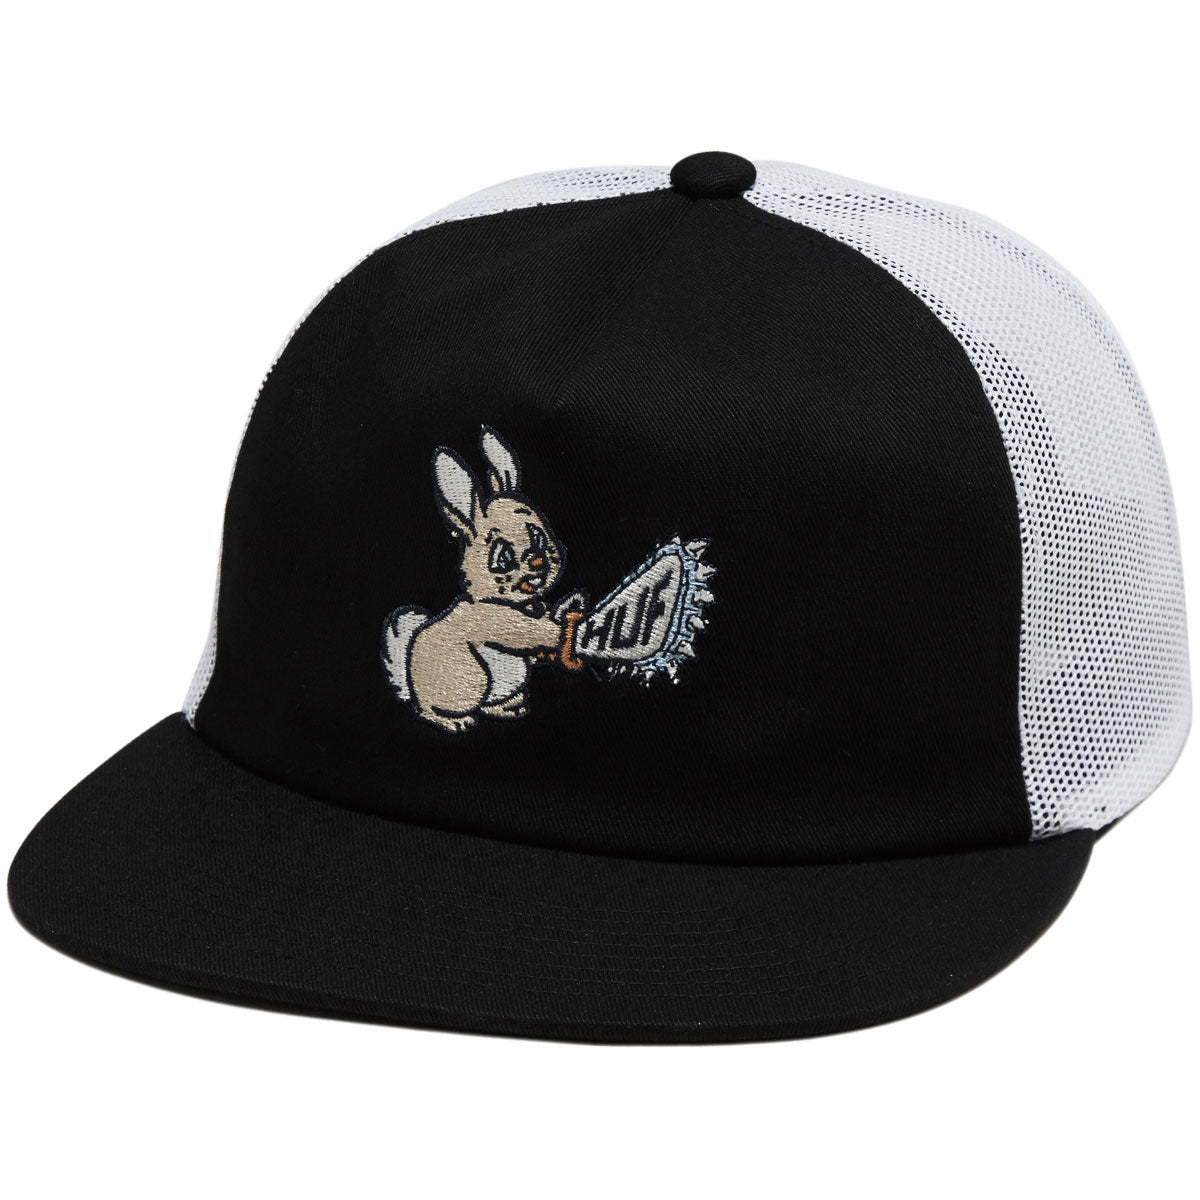 HUF Bad Hare Trucker Hat - Black image 1